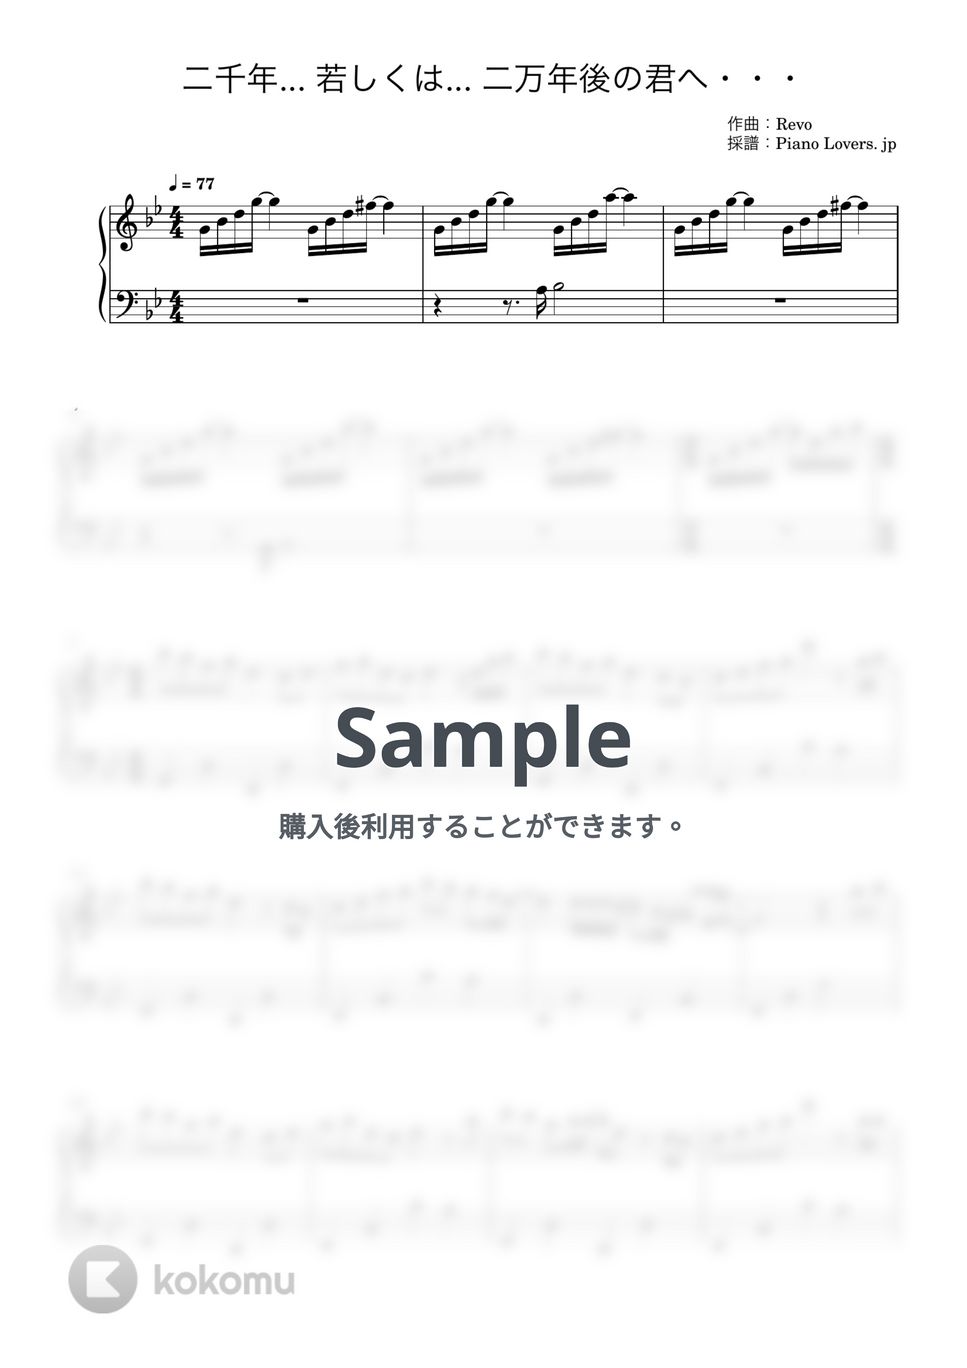 Linked Horizon - 二千年... 若しくは... 二万年後の君へ・・・ (進撃の巨人) by Piano Lovers. jp